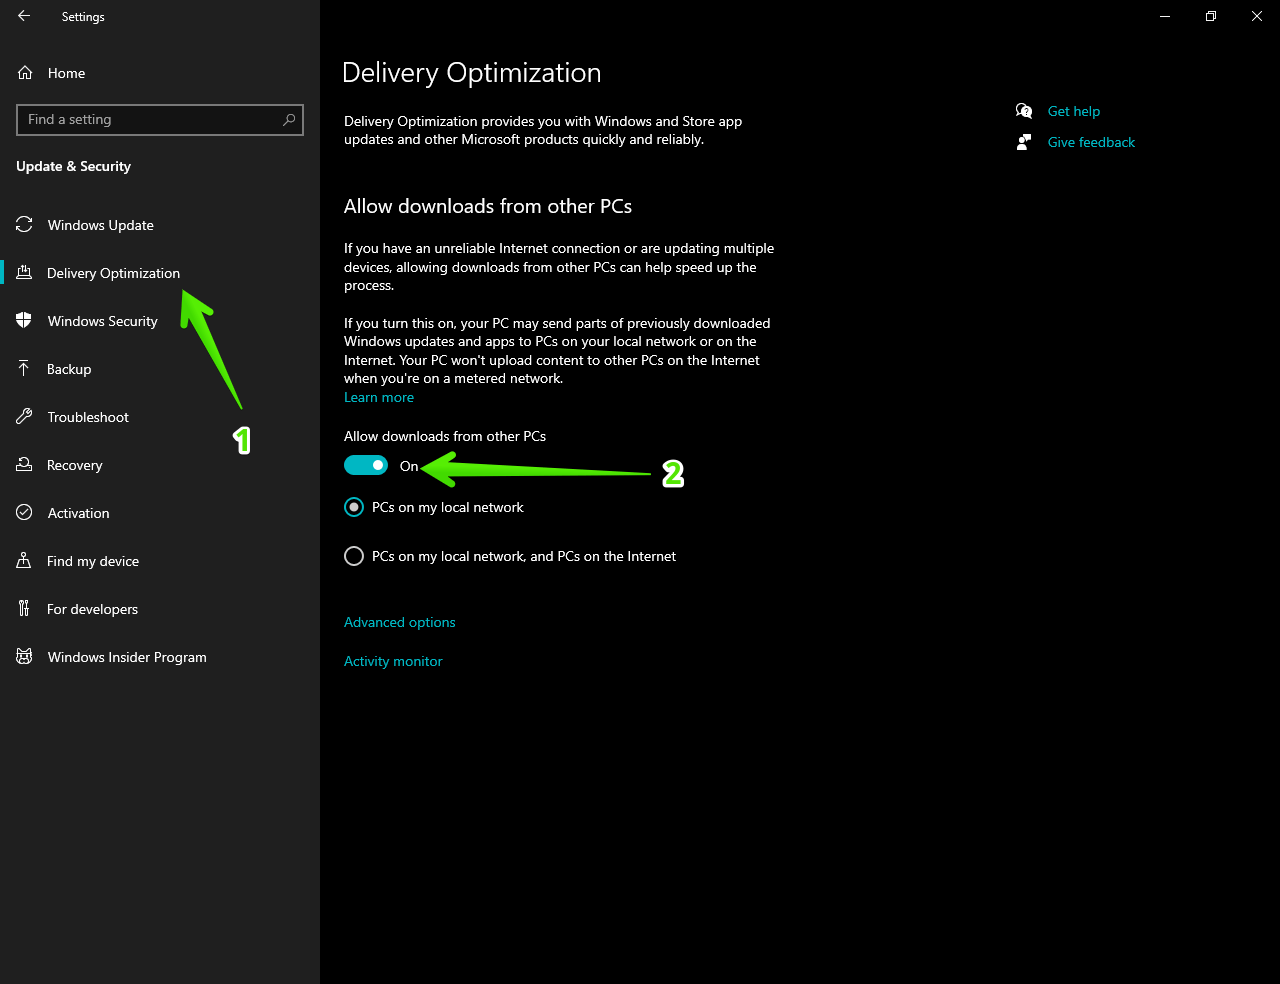 Windows 10 delivery optimization